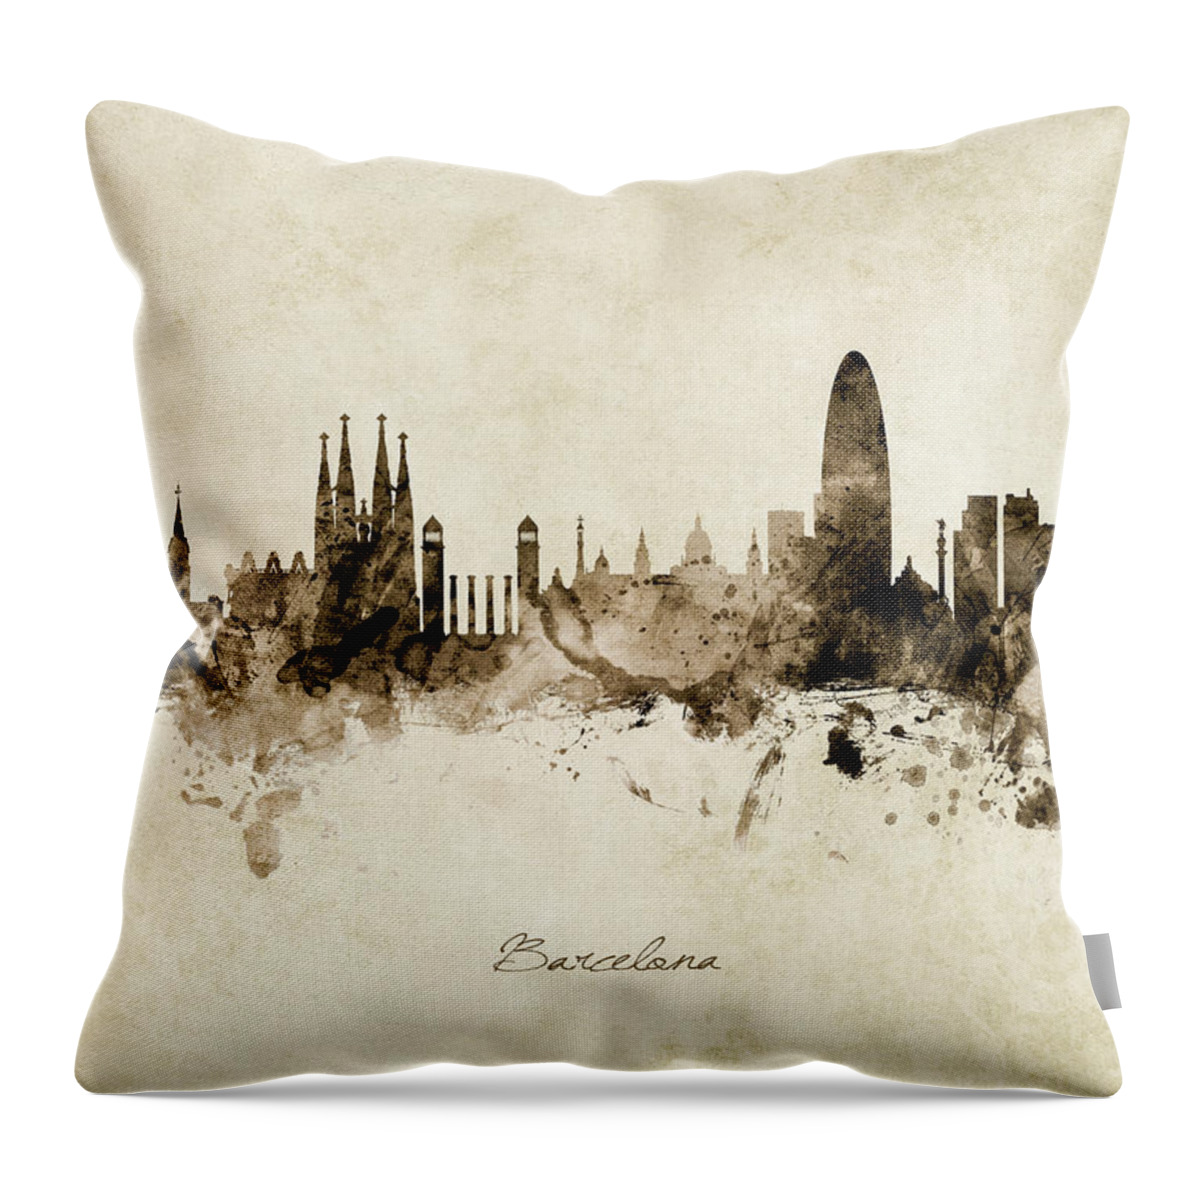 Barcelona Throw Pillow featuring the digital art Barcelona Spain Skyline #24 by Michael Tompsett